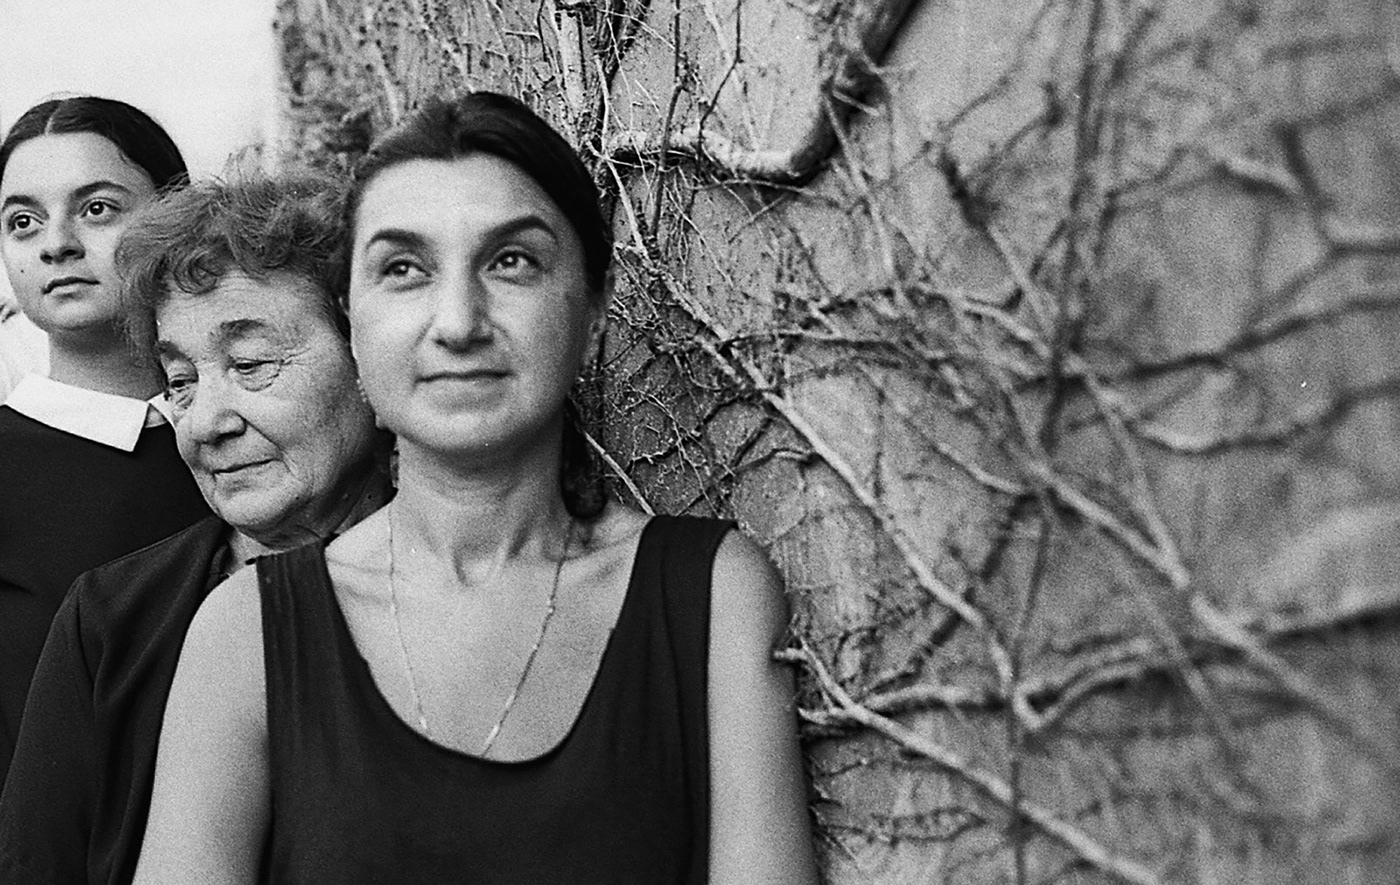 film photography Analogue black and white b&w portrait people family Georgia children mirror